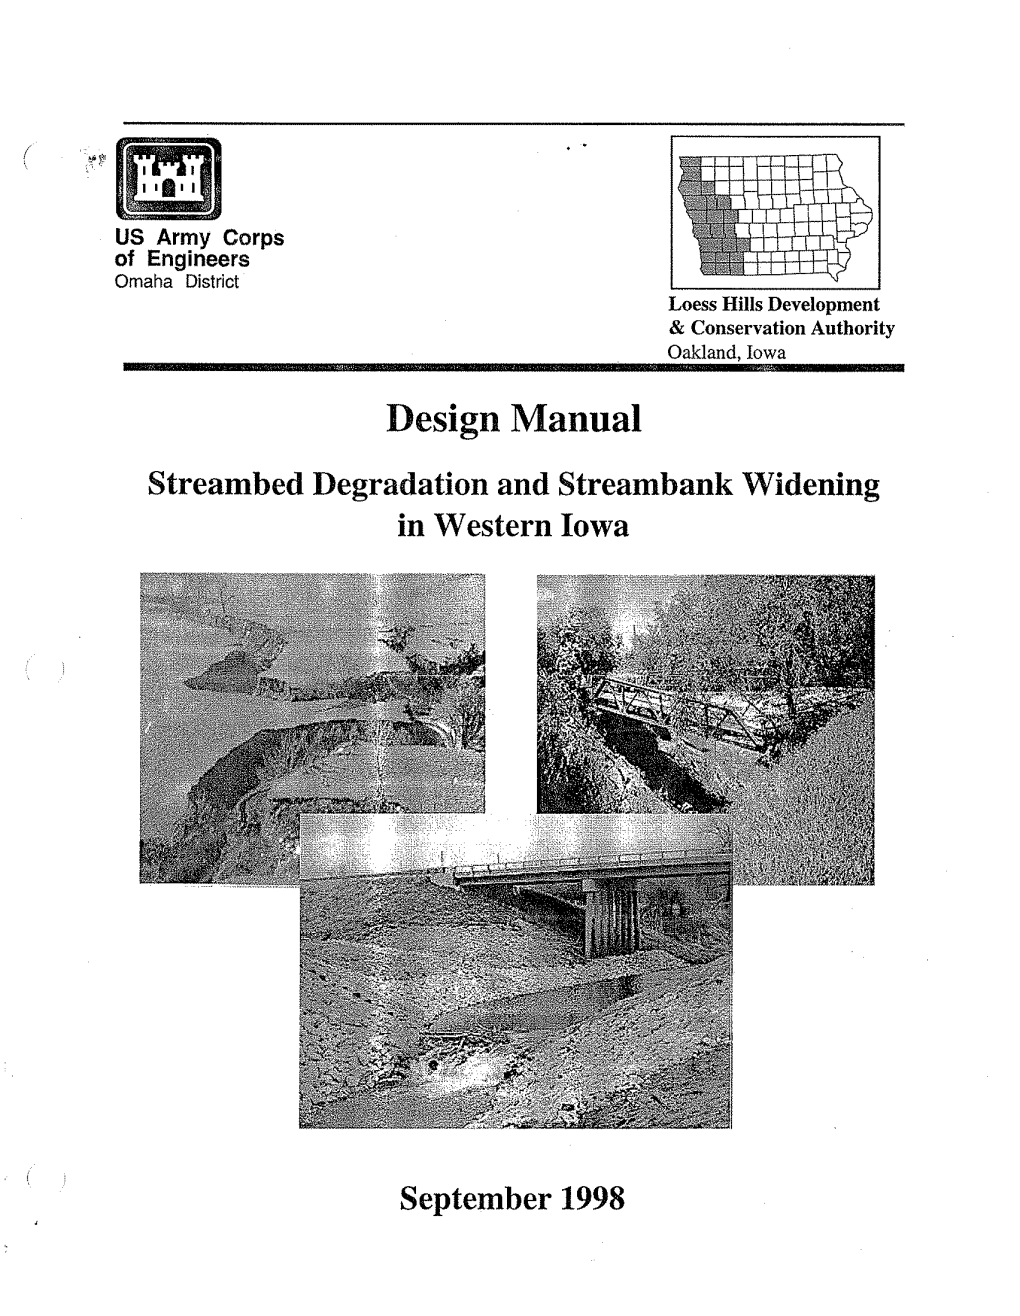 Design Manual Streambed Degradation and Streambank Widening in Western Iowa